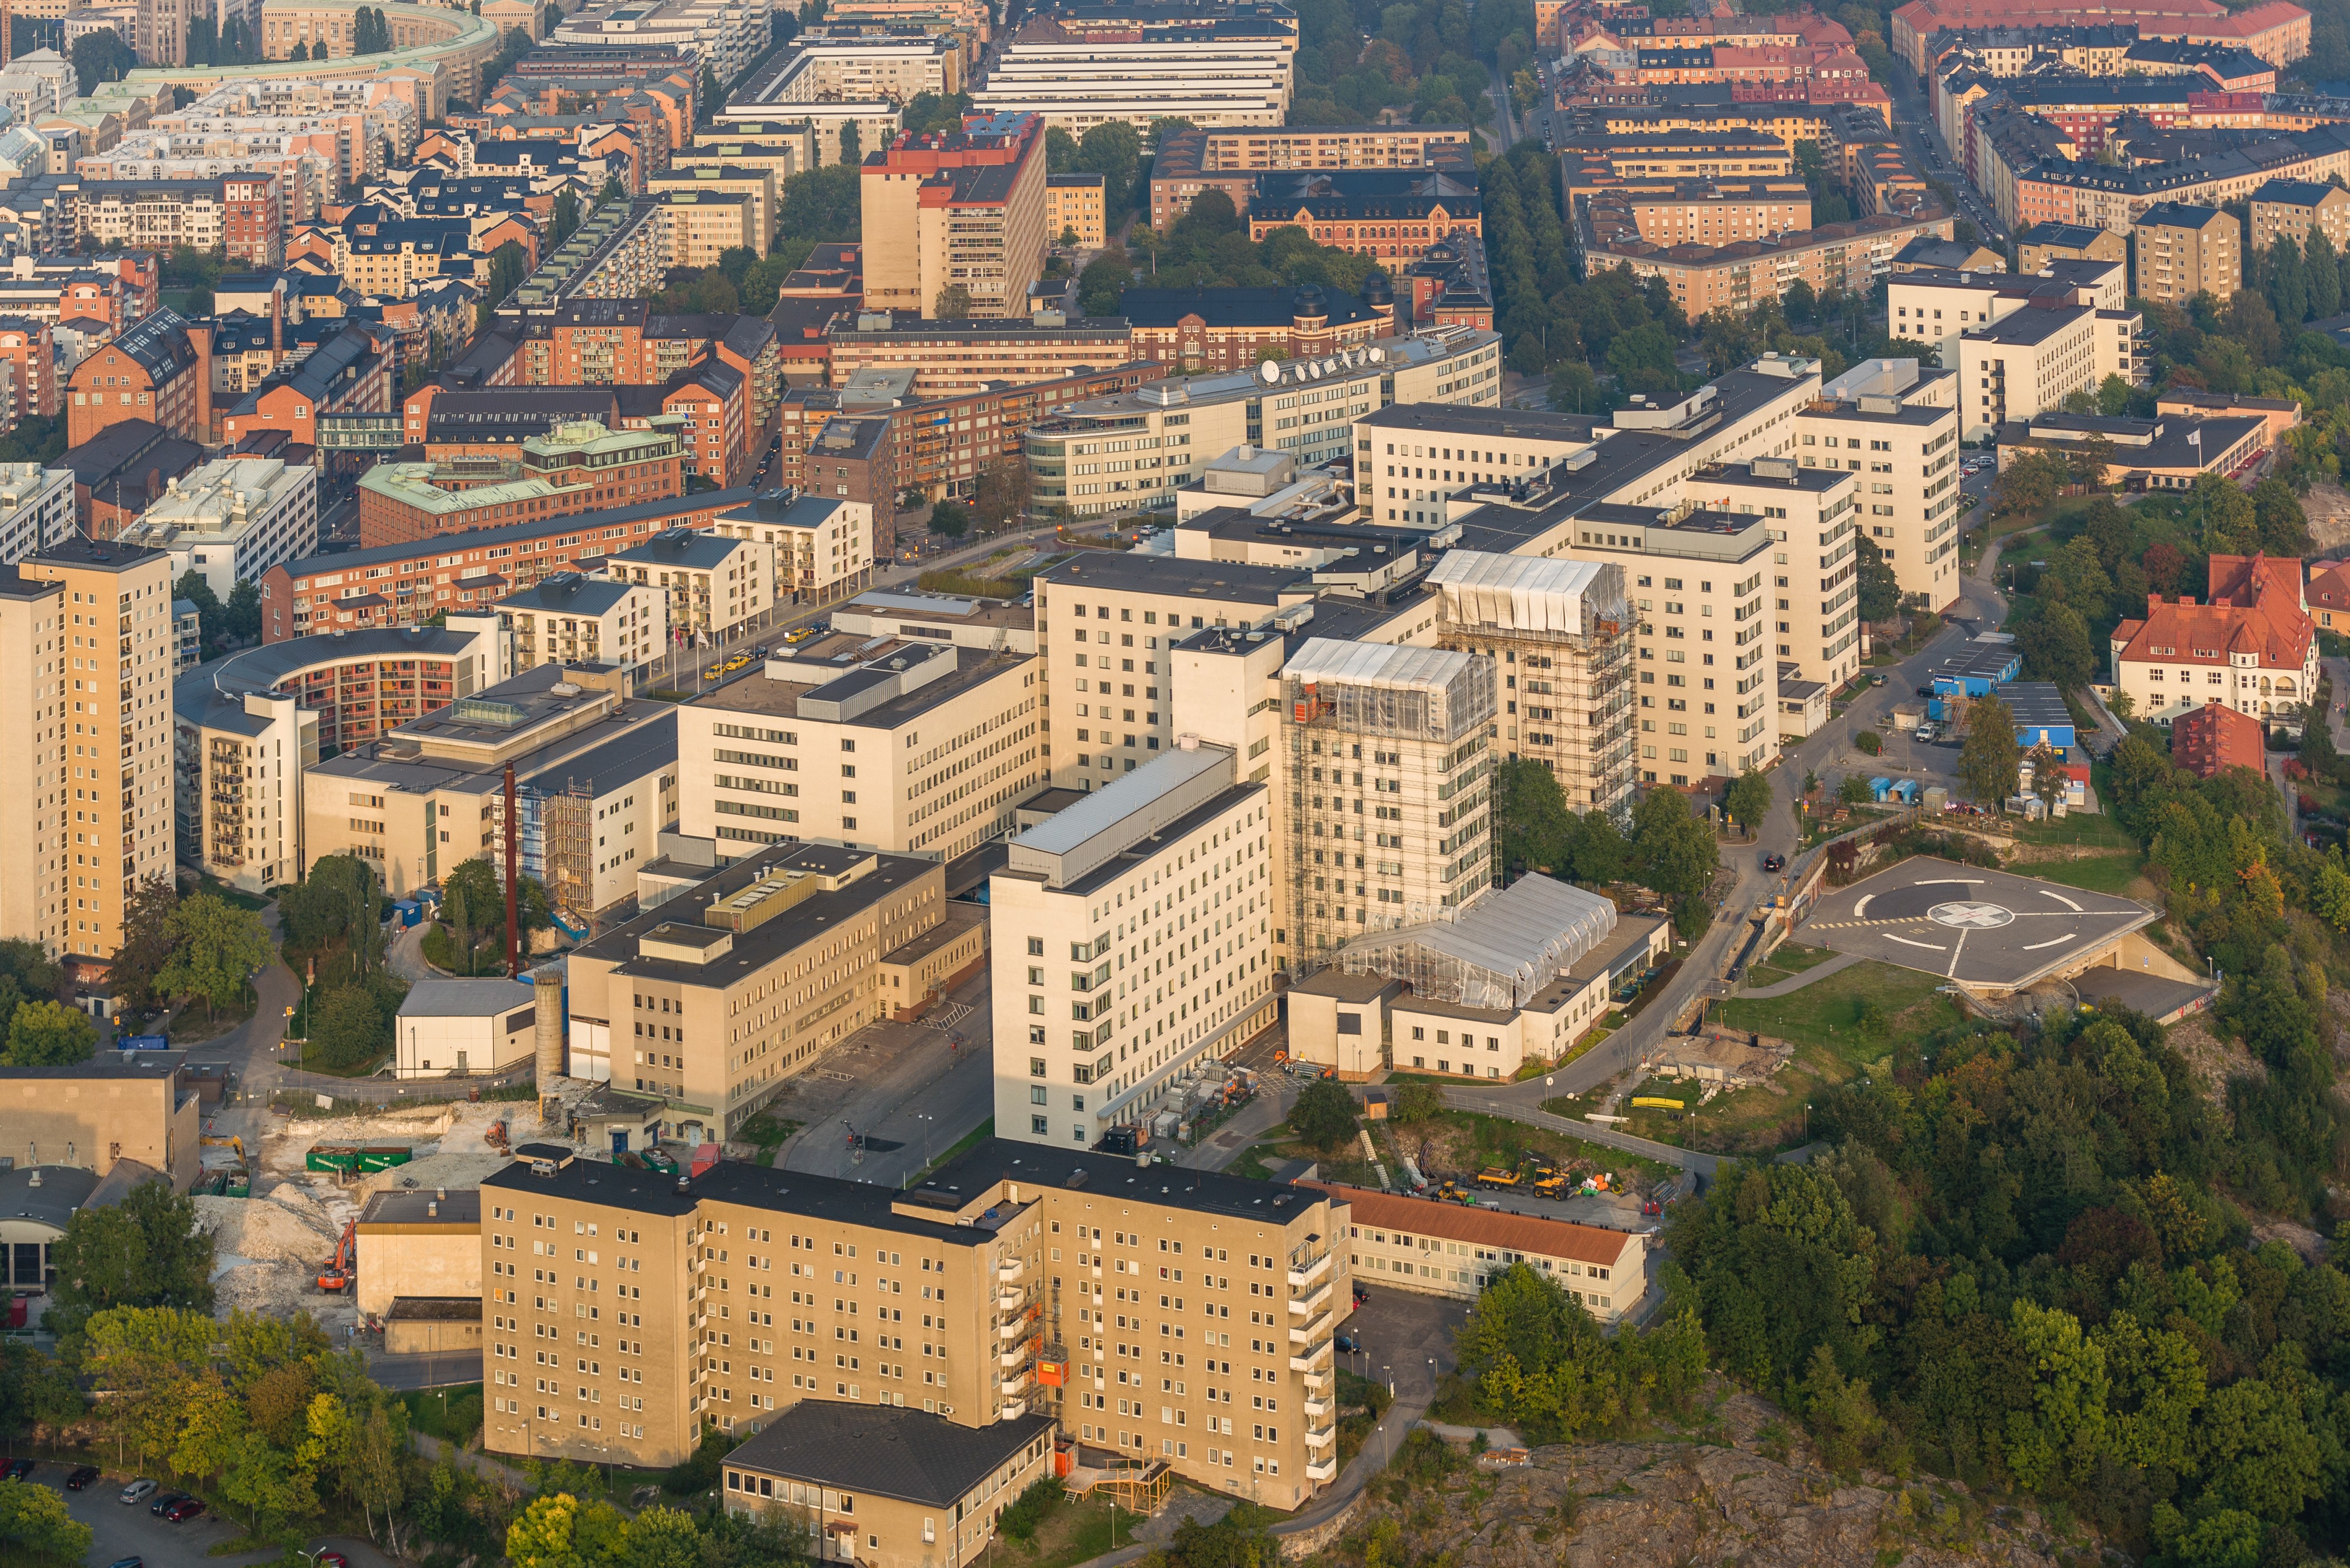 Södersjukhuset September 2014